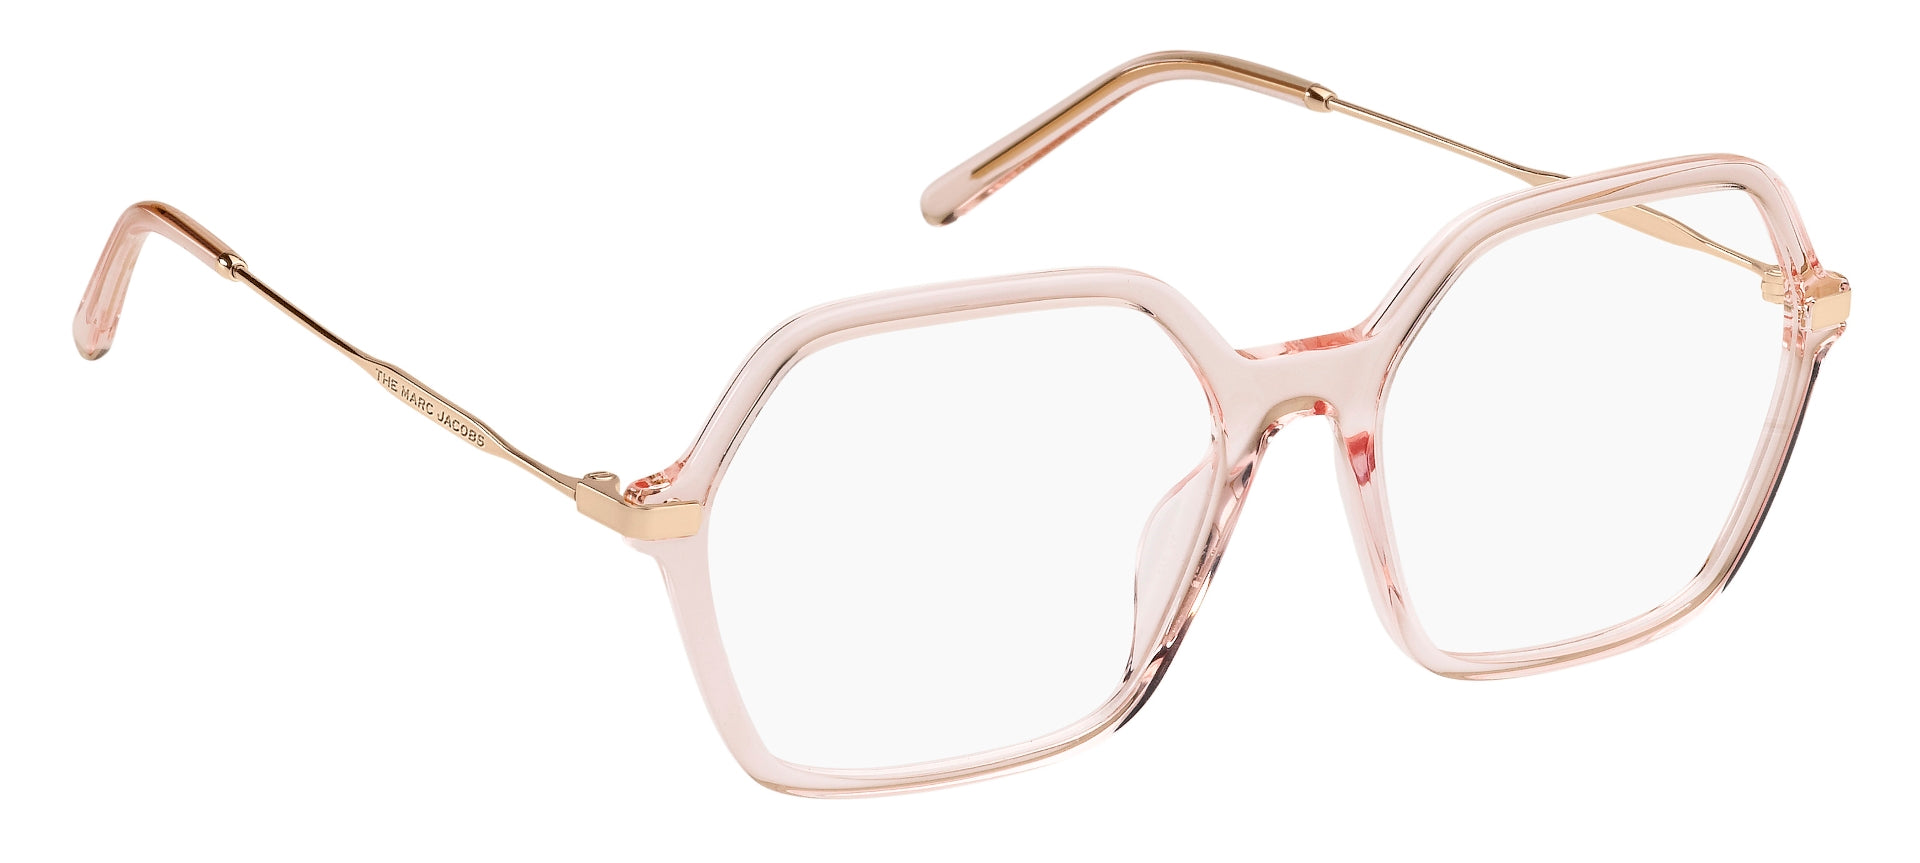 Marc Jacobs Woman Geometrical Eyeglasses